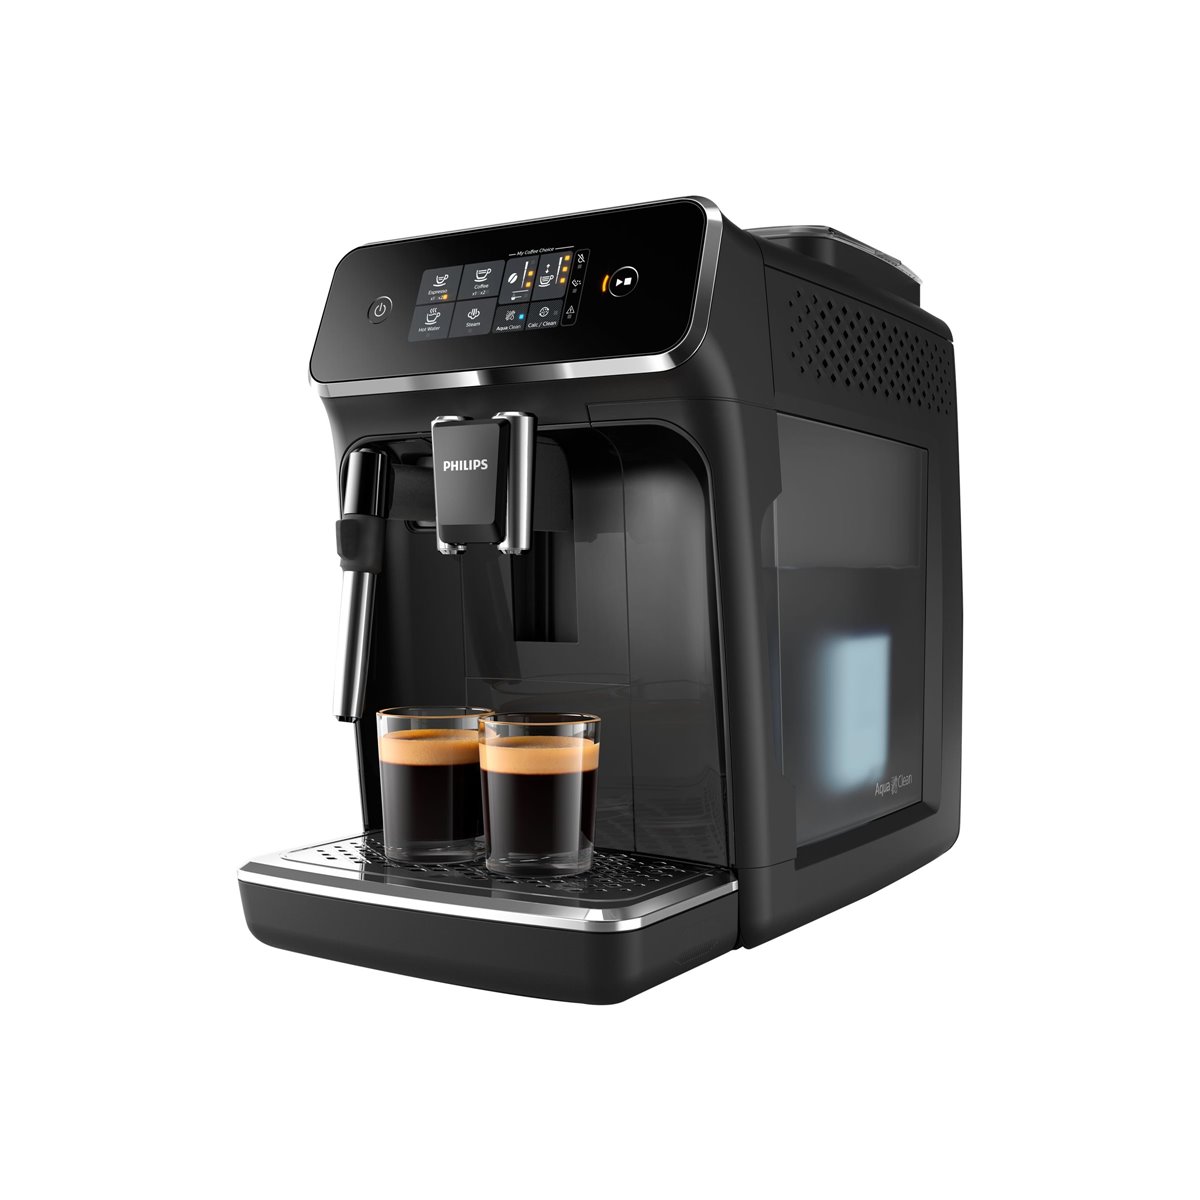 Philips EP2221/40 - Espresso machine - 1.8 L - Coffee beans - Built-in grinder - 1500 W - Black